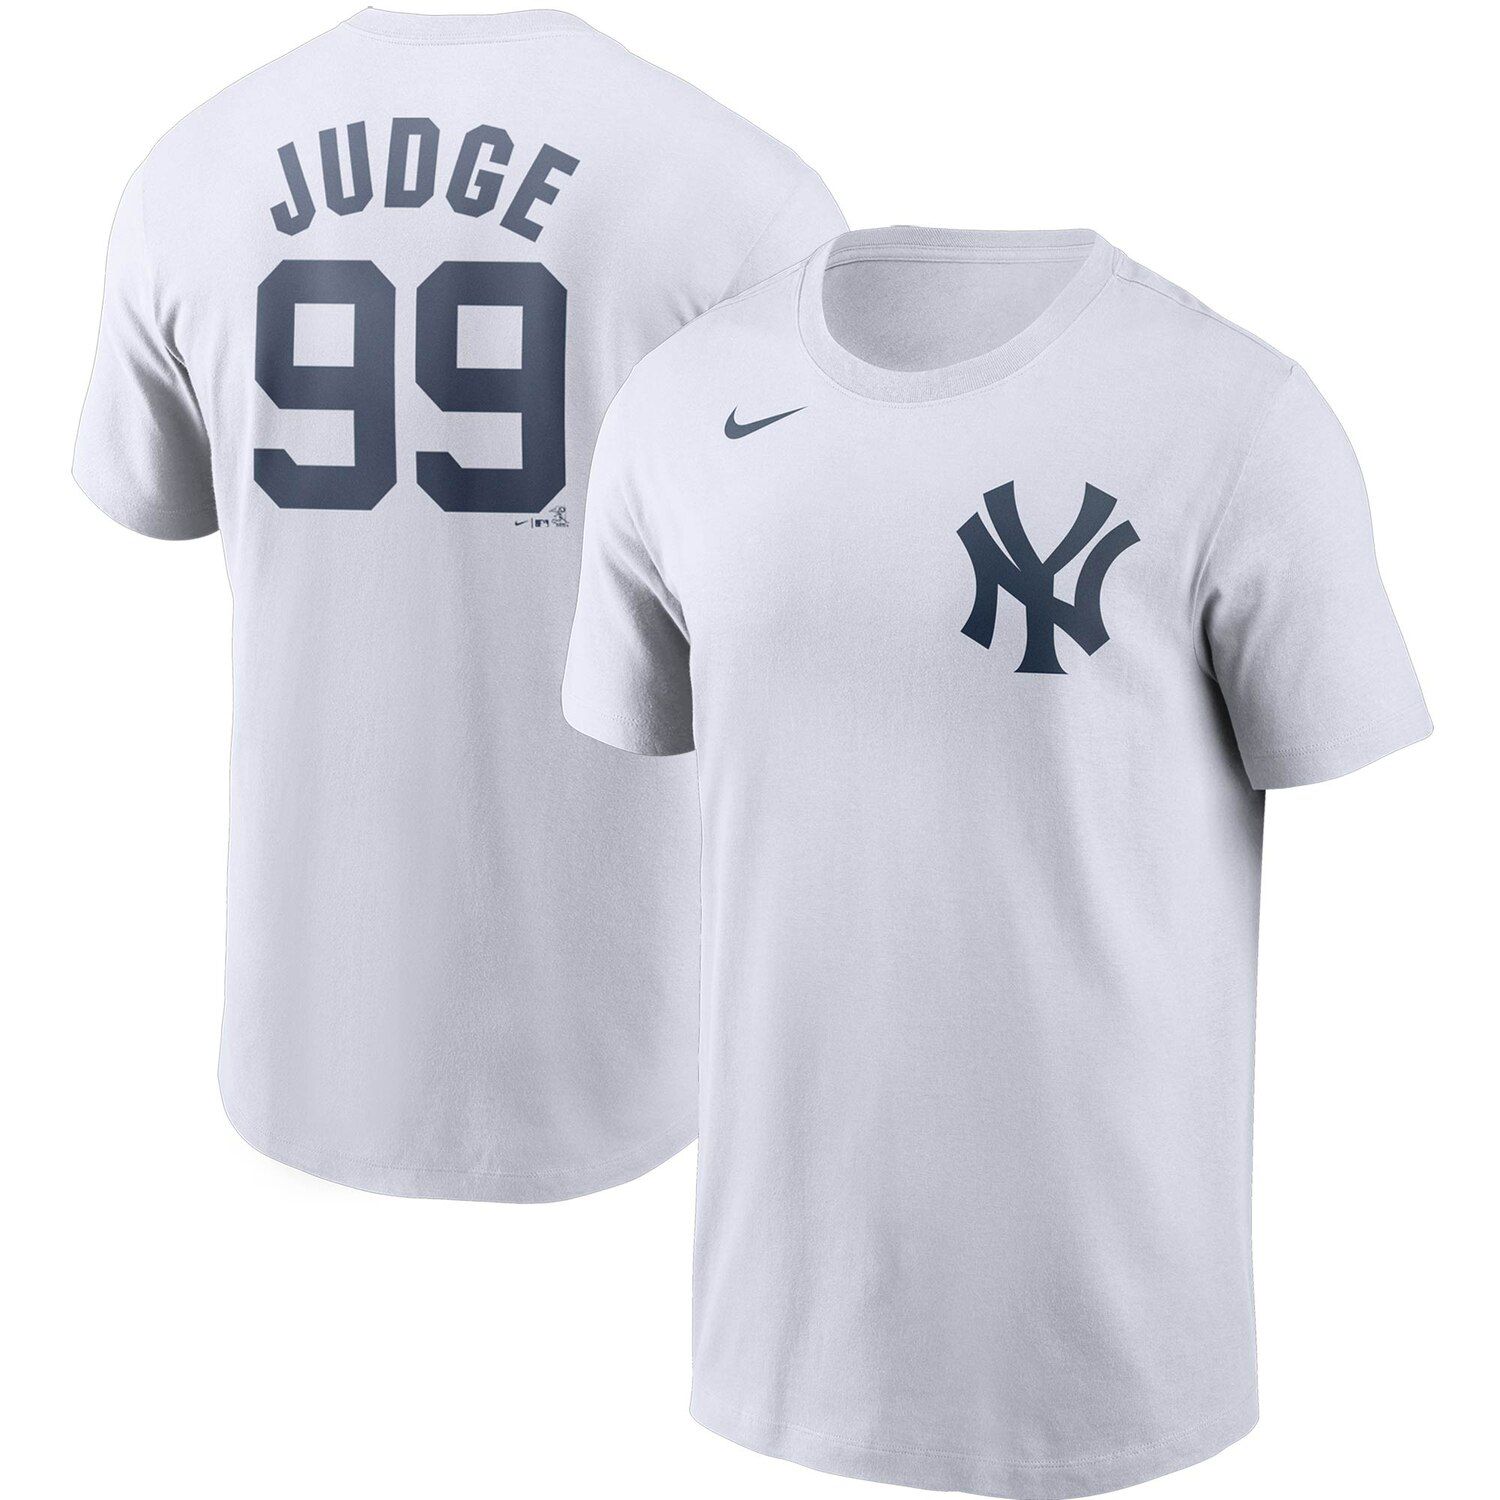 the judge t shirt